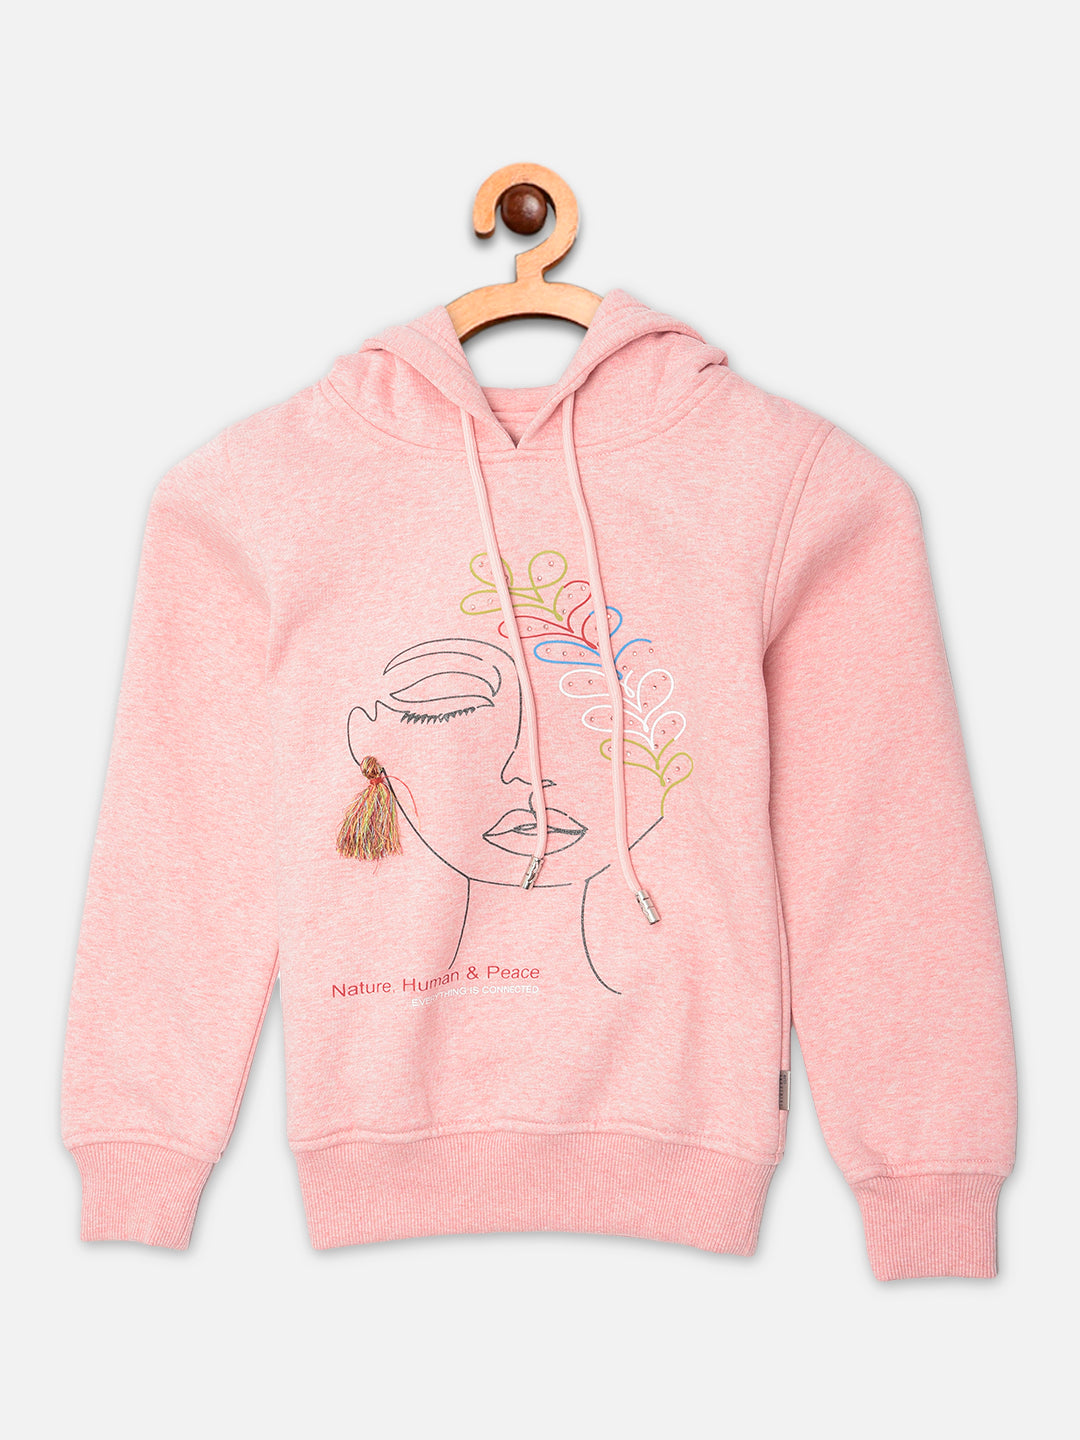 Girls Pink Printed Hooded Sweatshirt - Girls Sweatshirts